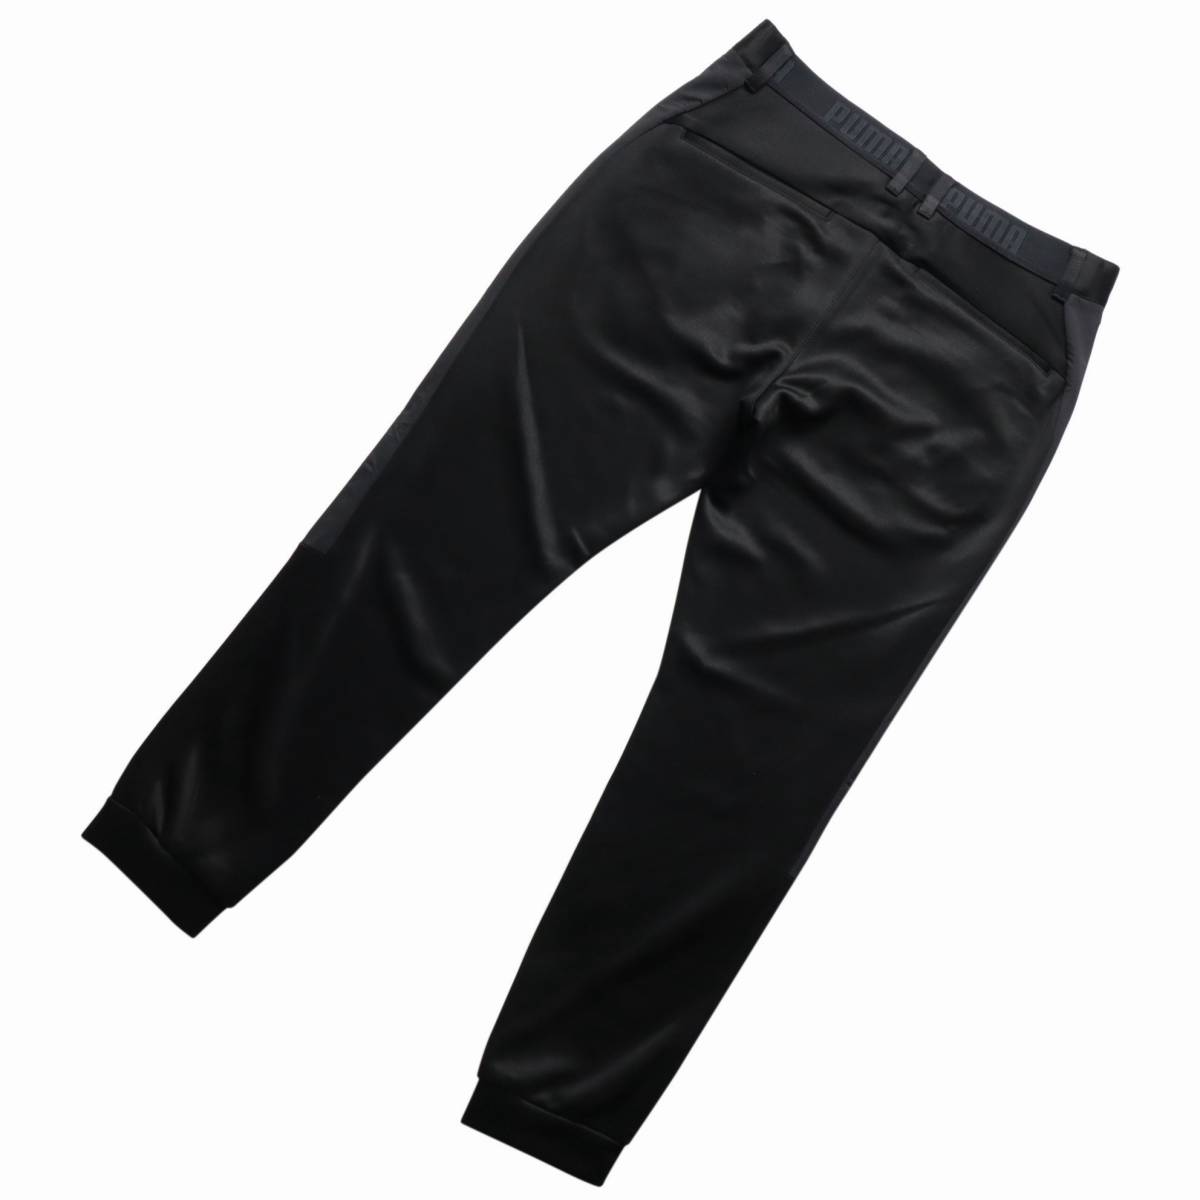 #[M] regular price 28,600 jpy Puma Golf combination sweat jacket & jogger pants #